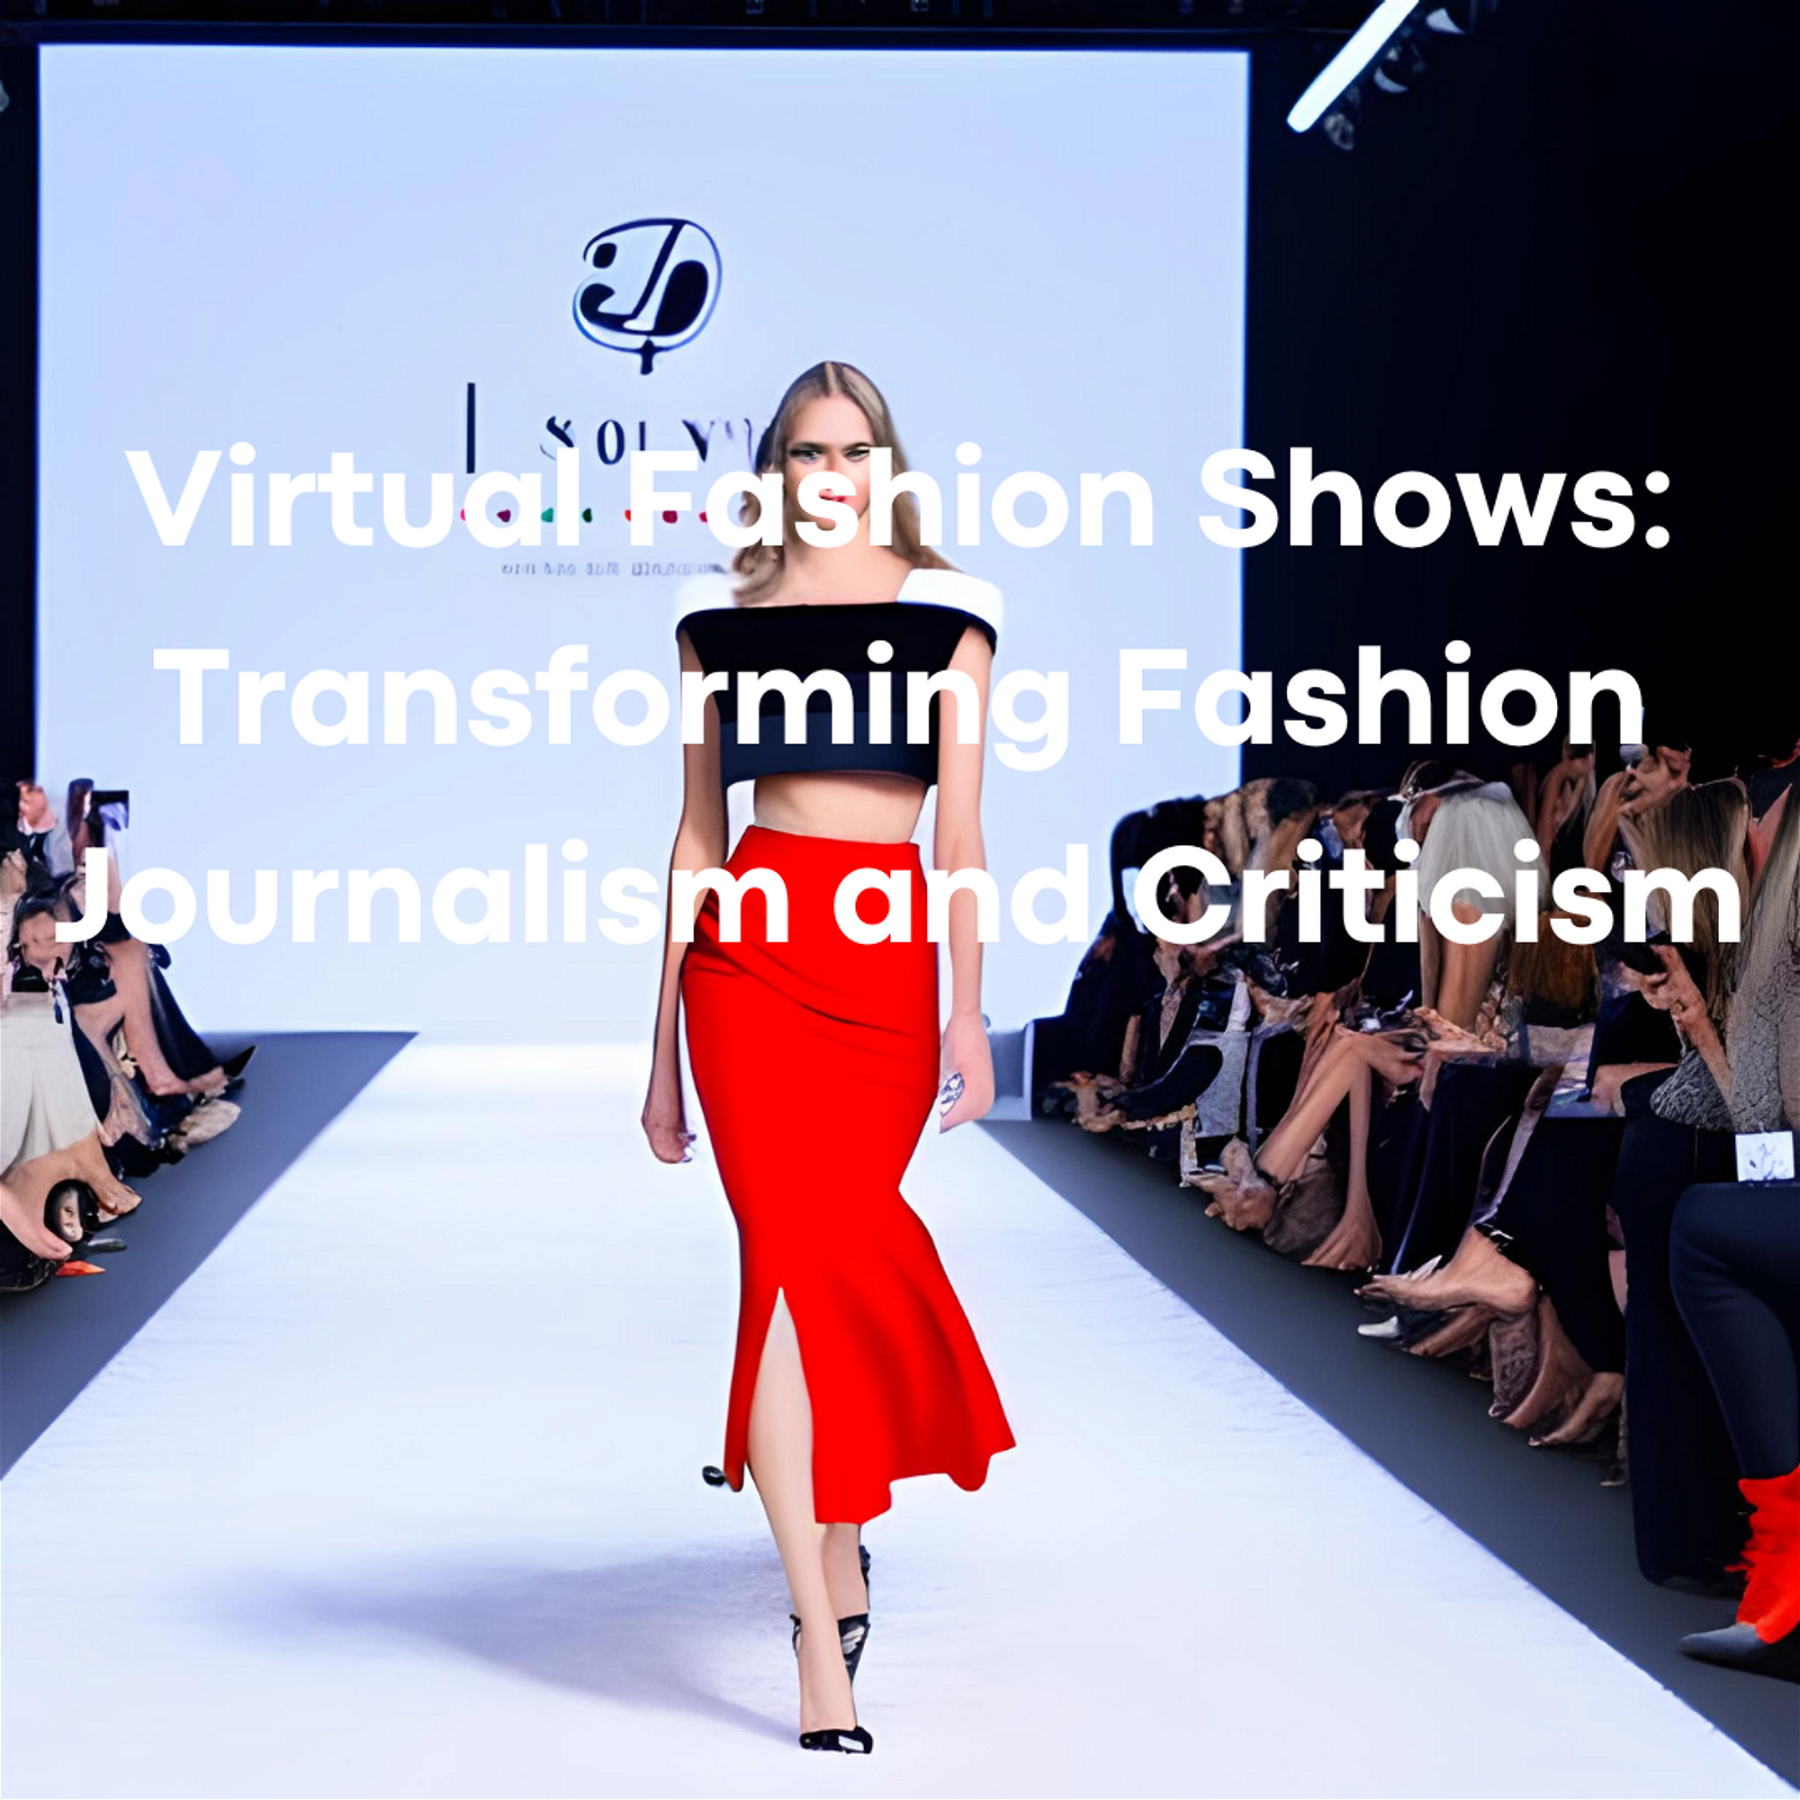 Virtual Fashion Shows: Transforming Fashion Journalism and Criticism